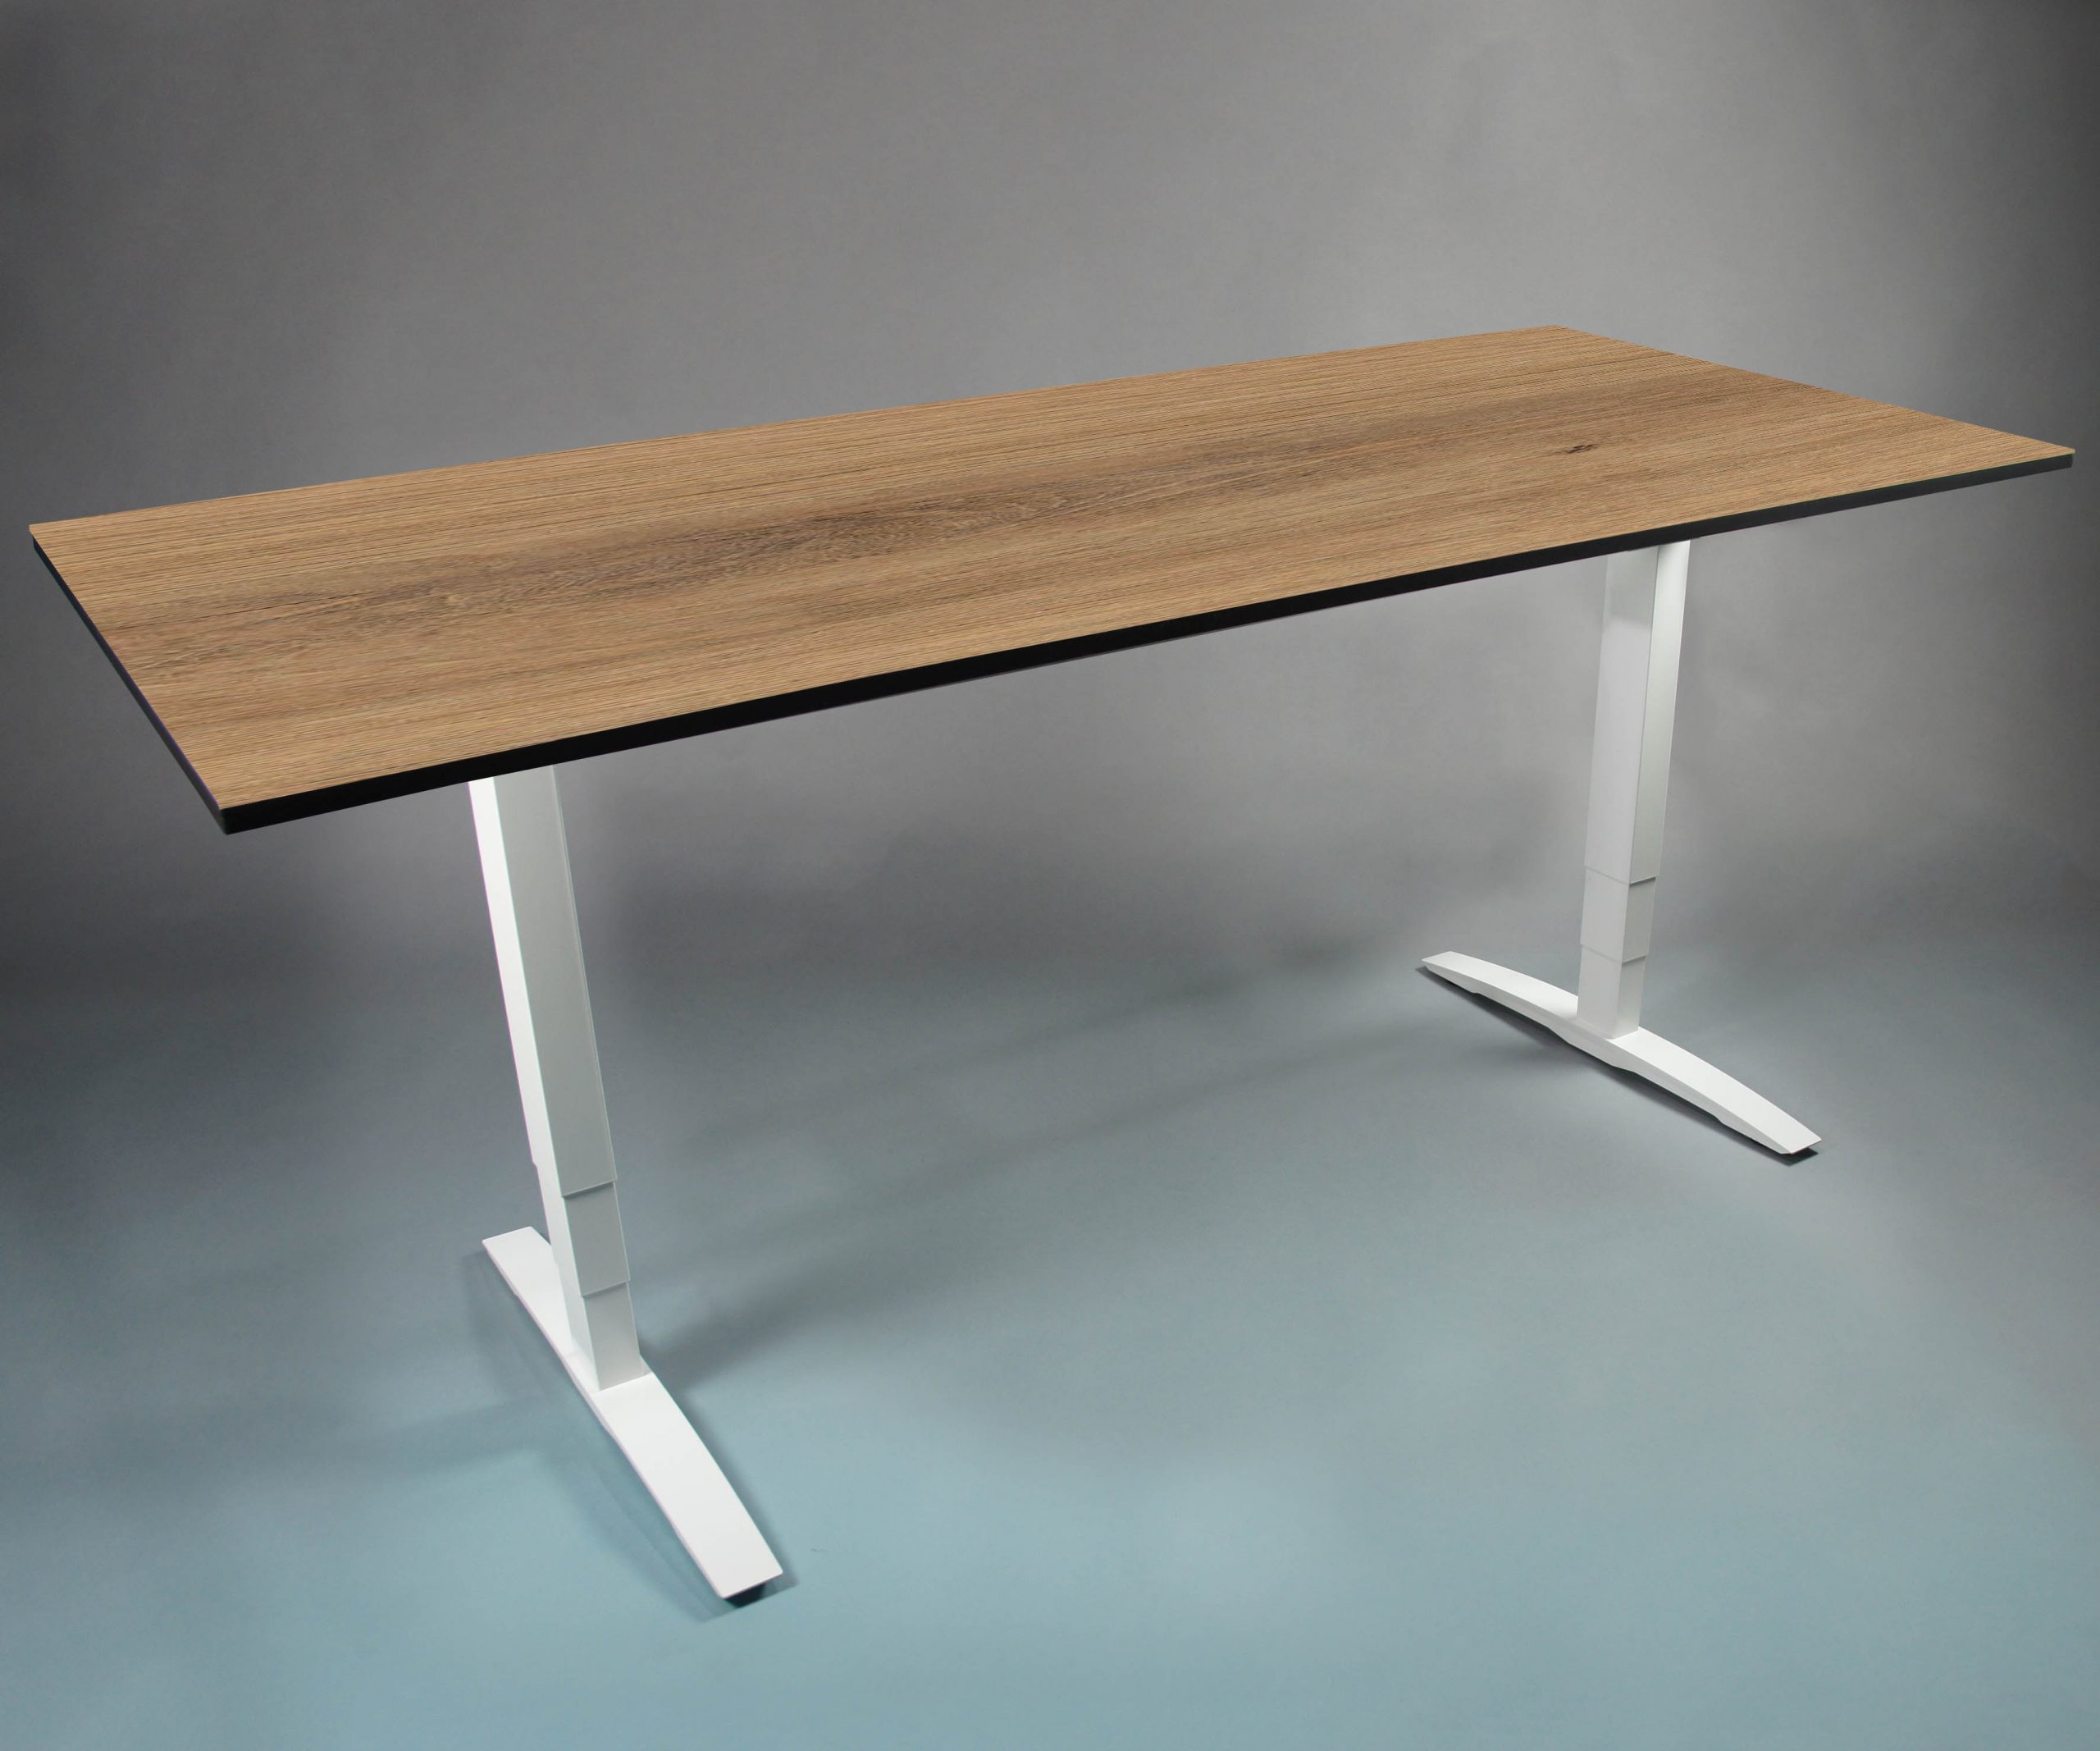 OMT frame met tafelblad - zit sta bureau - thuiswerktafel